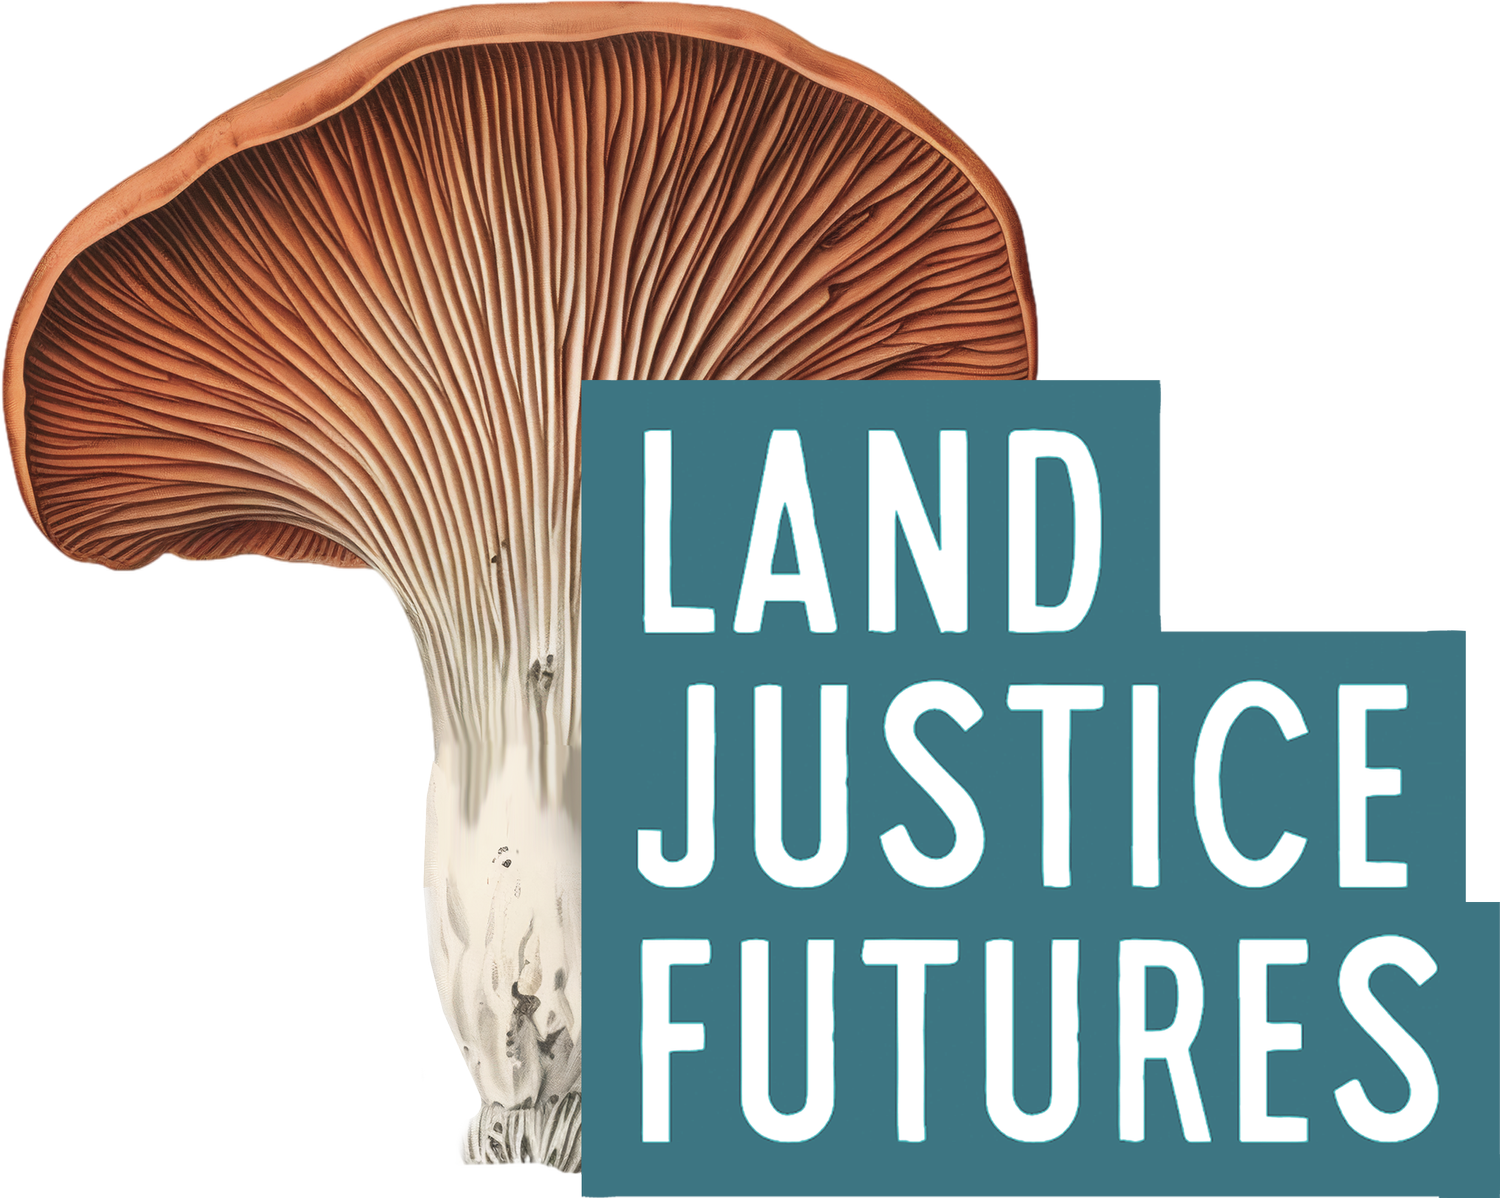 LAND JUSTICE FUTURES